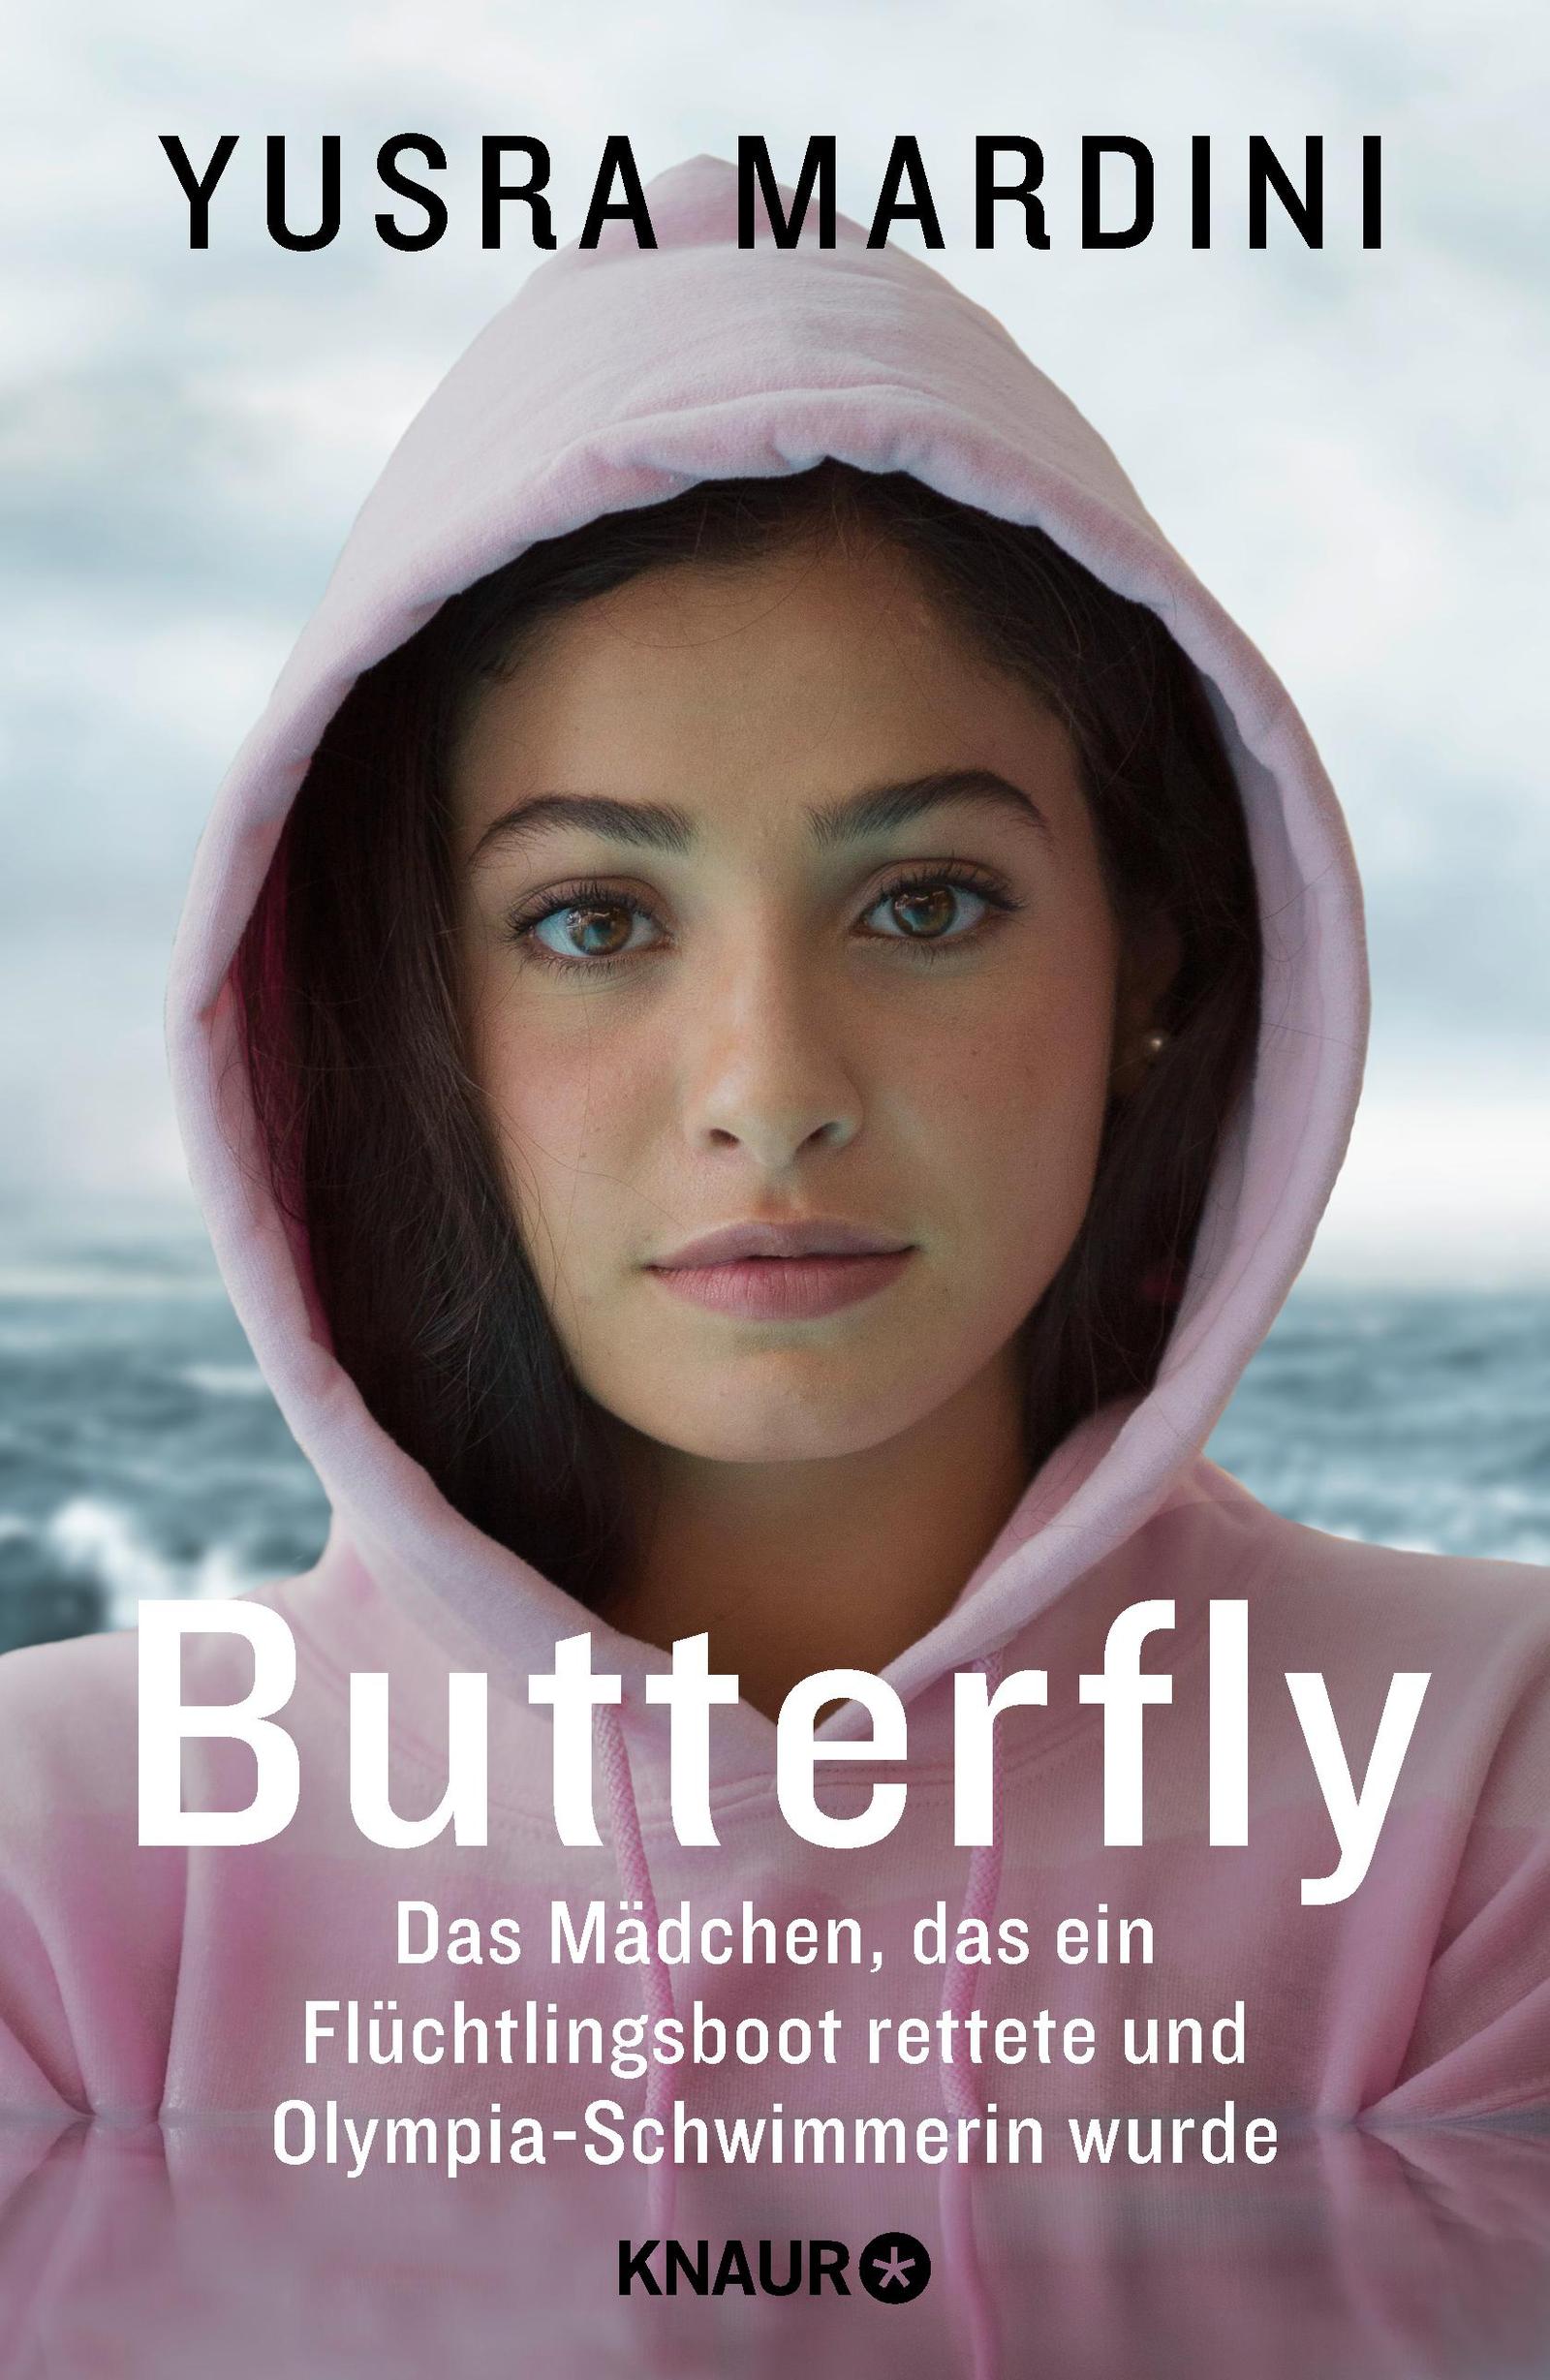 Buchcover "Butterfly"